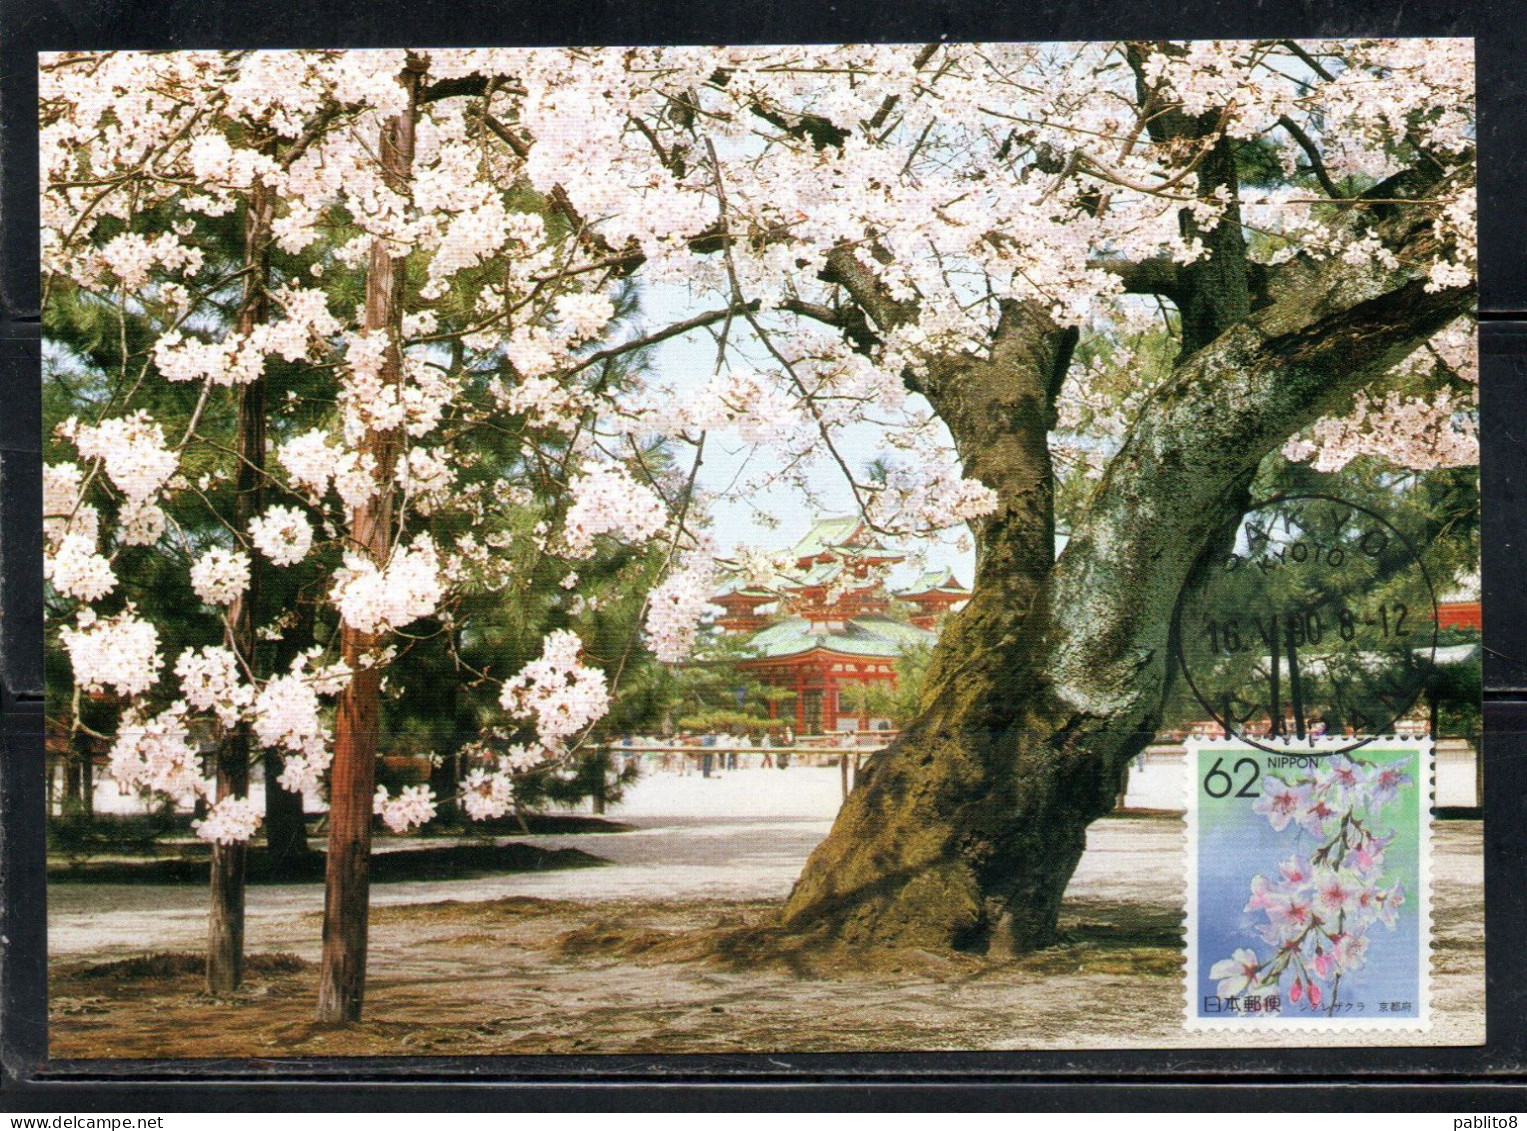 JAPAN GIAPPONE 1990 FLORA FLOWERS PREFECTURE FLOWER 62y MAXI MAXIMUM CARD - Cartes-maximum